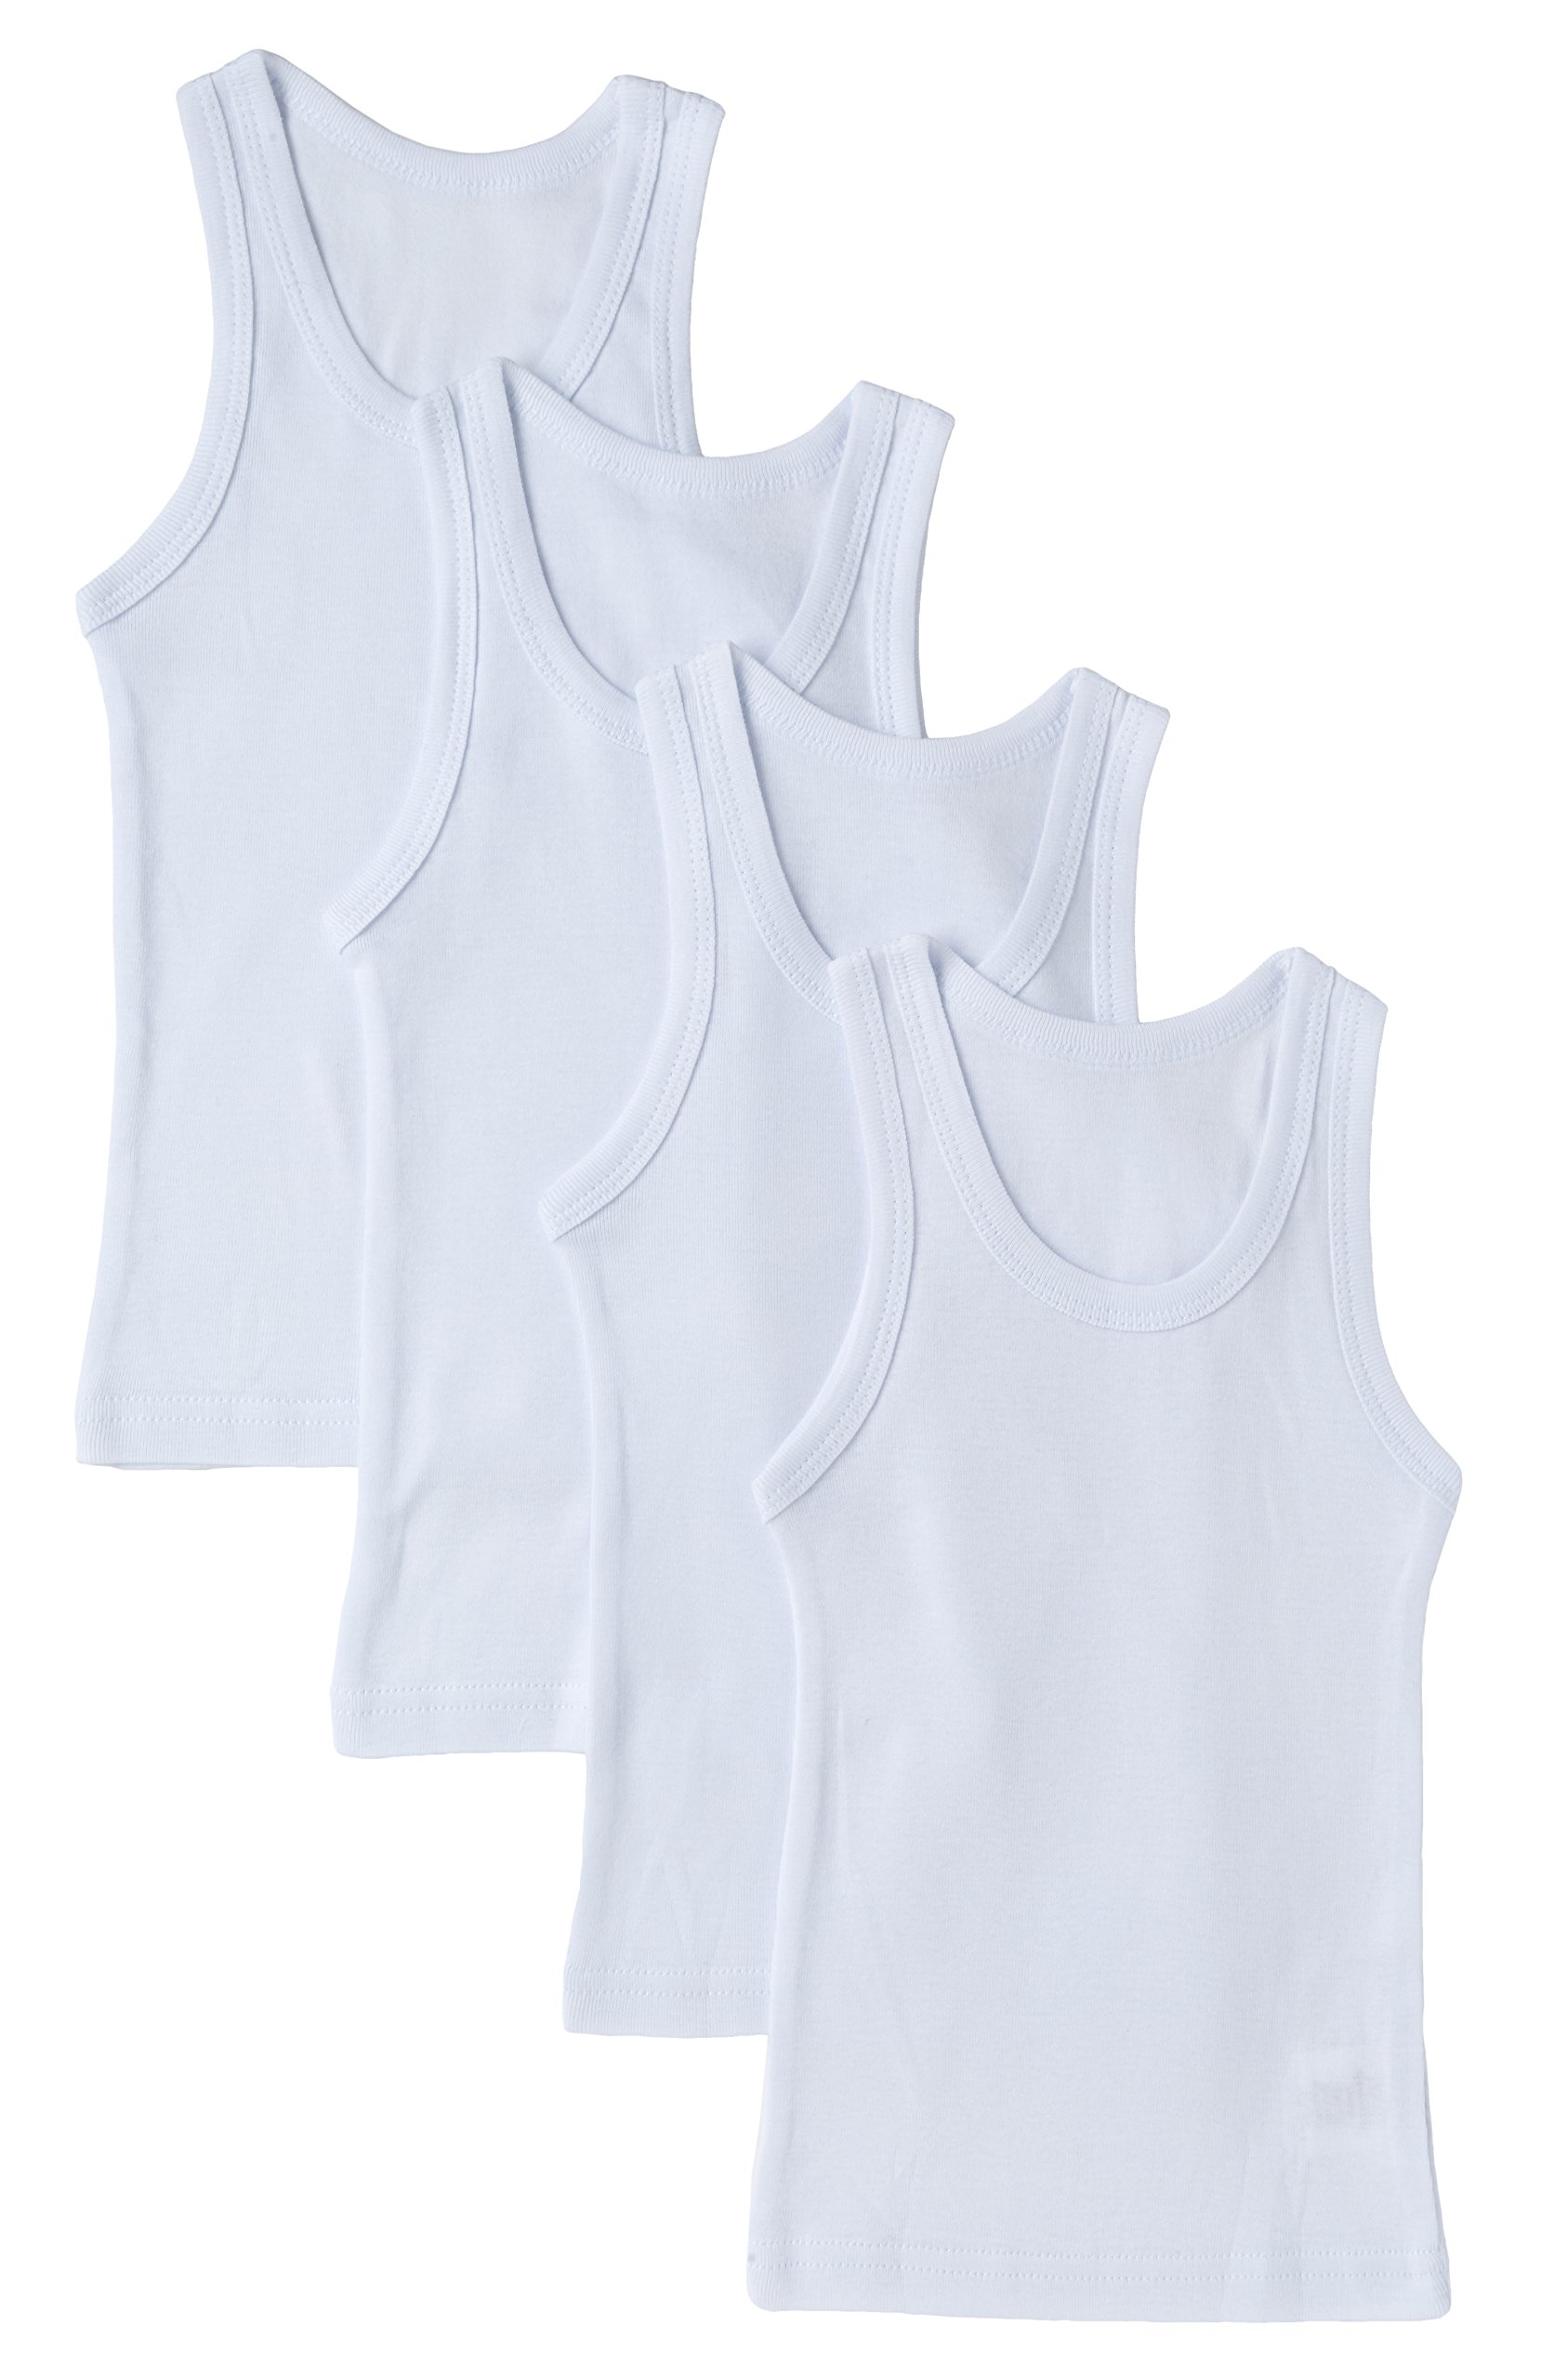 Sportoli Boys Ultra Soft 100% Cotton Tagless Tank Top Undershirts 4-Pack